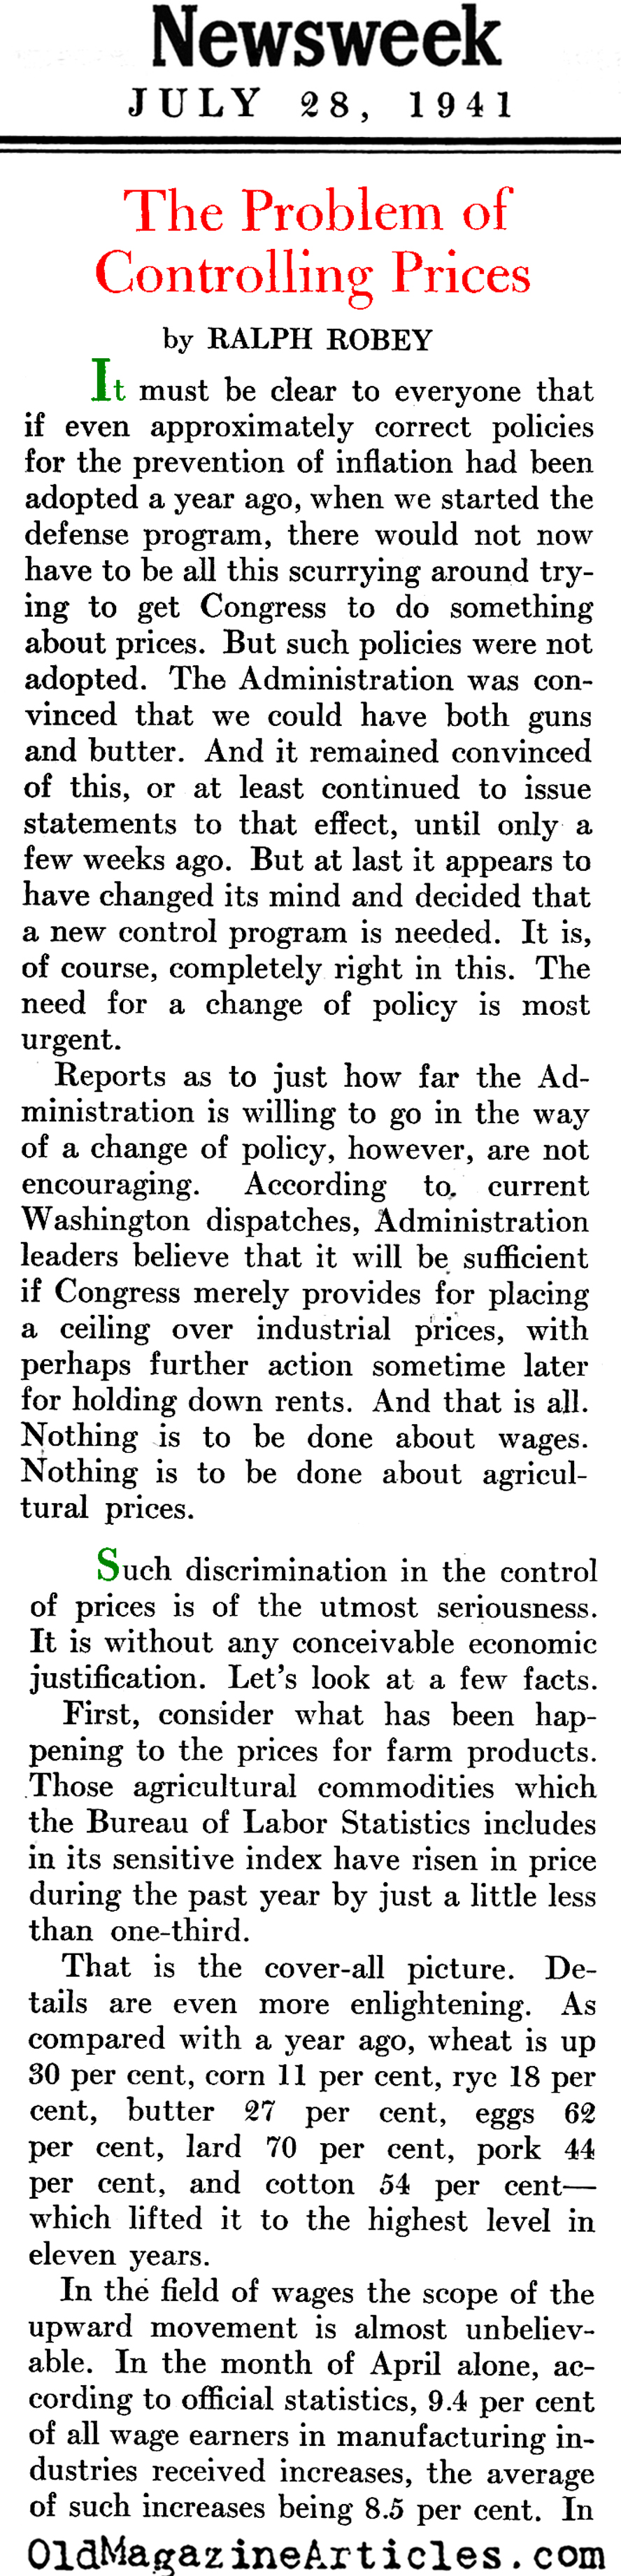 New Deal Price Controls (Newsweek Magazine, 1941)